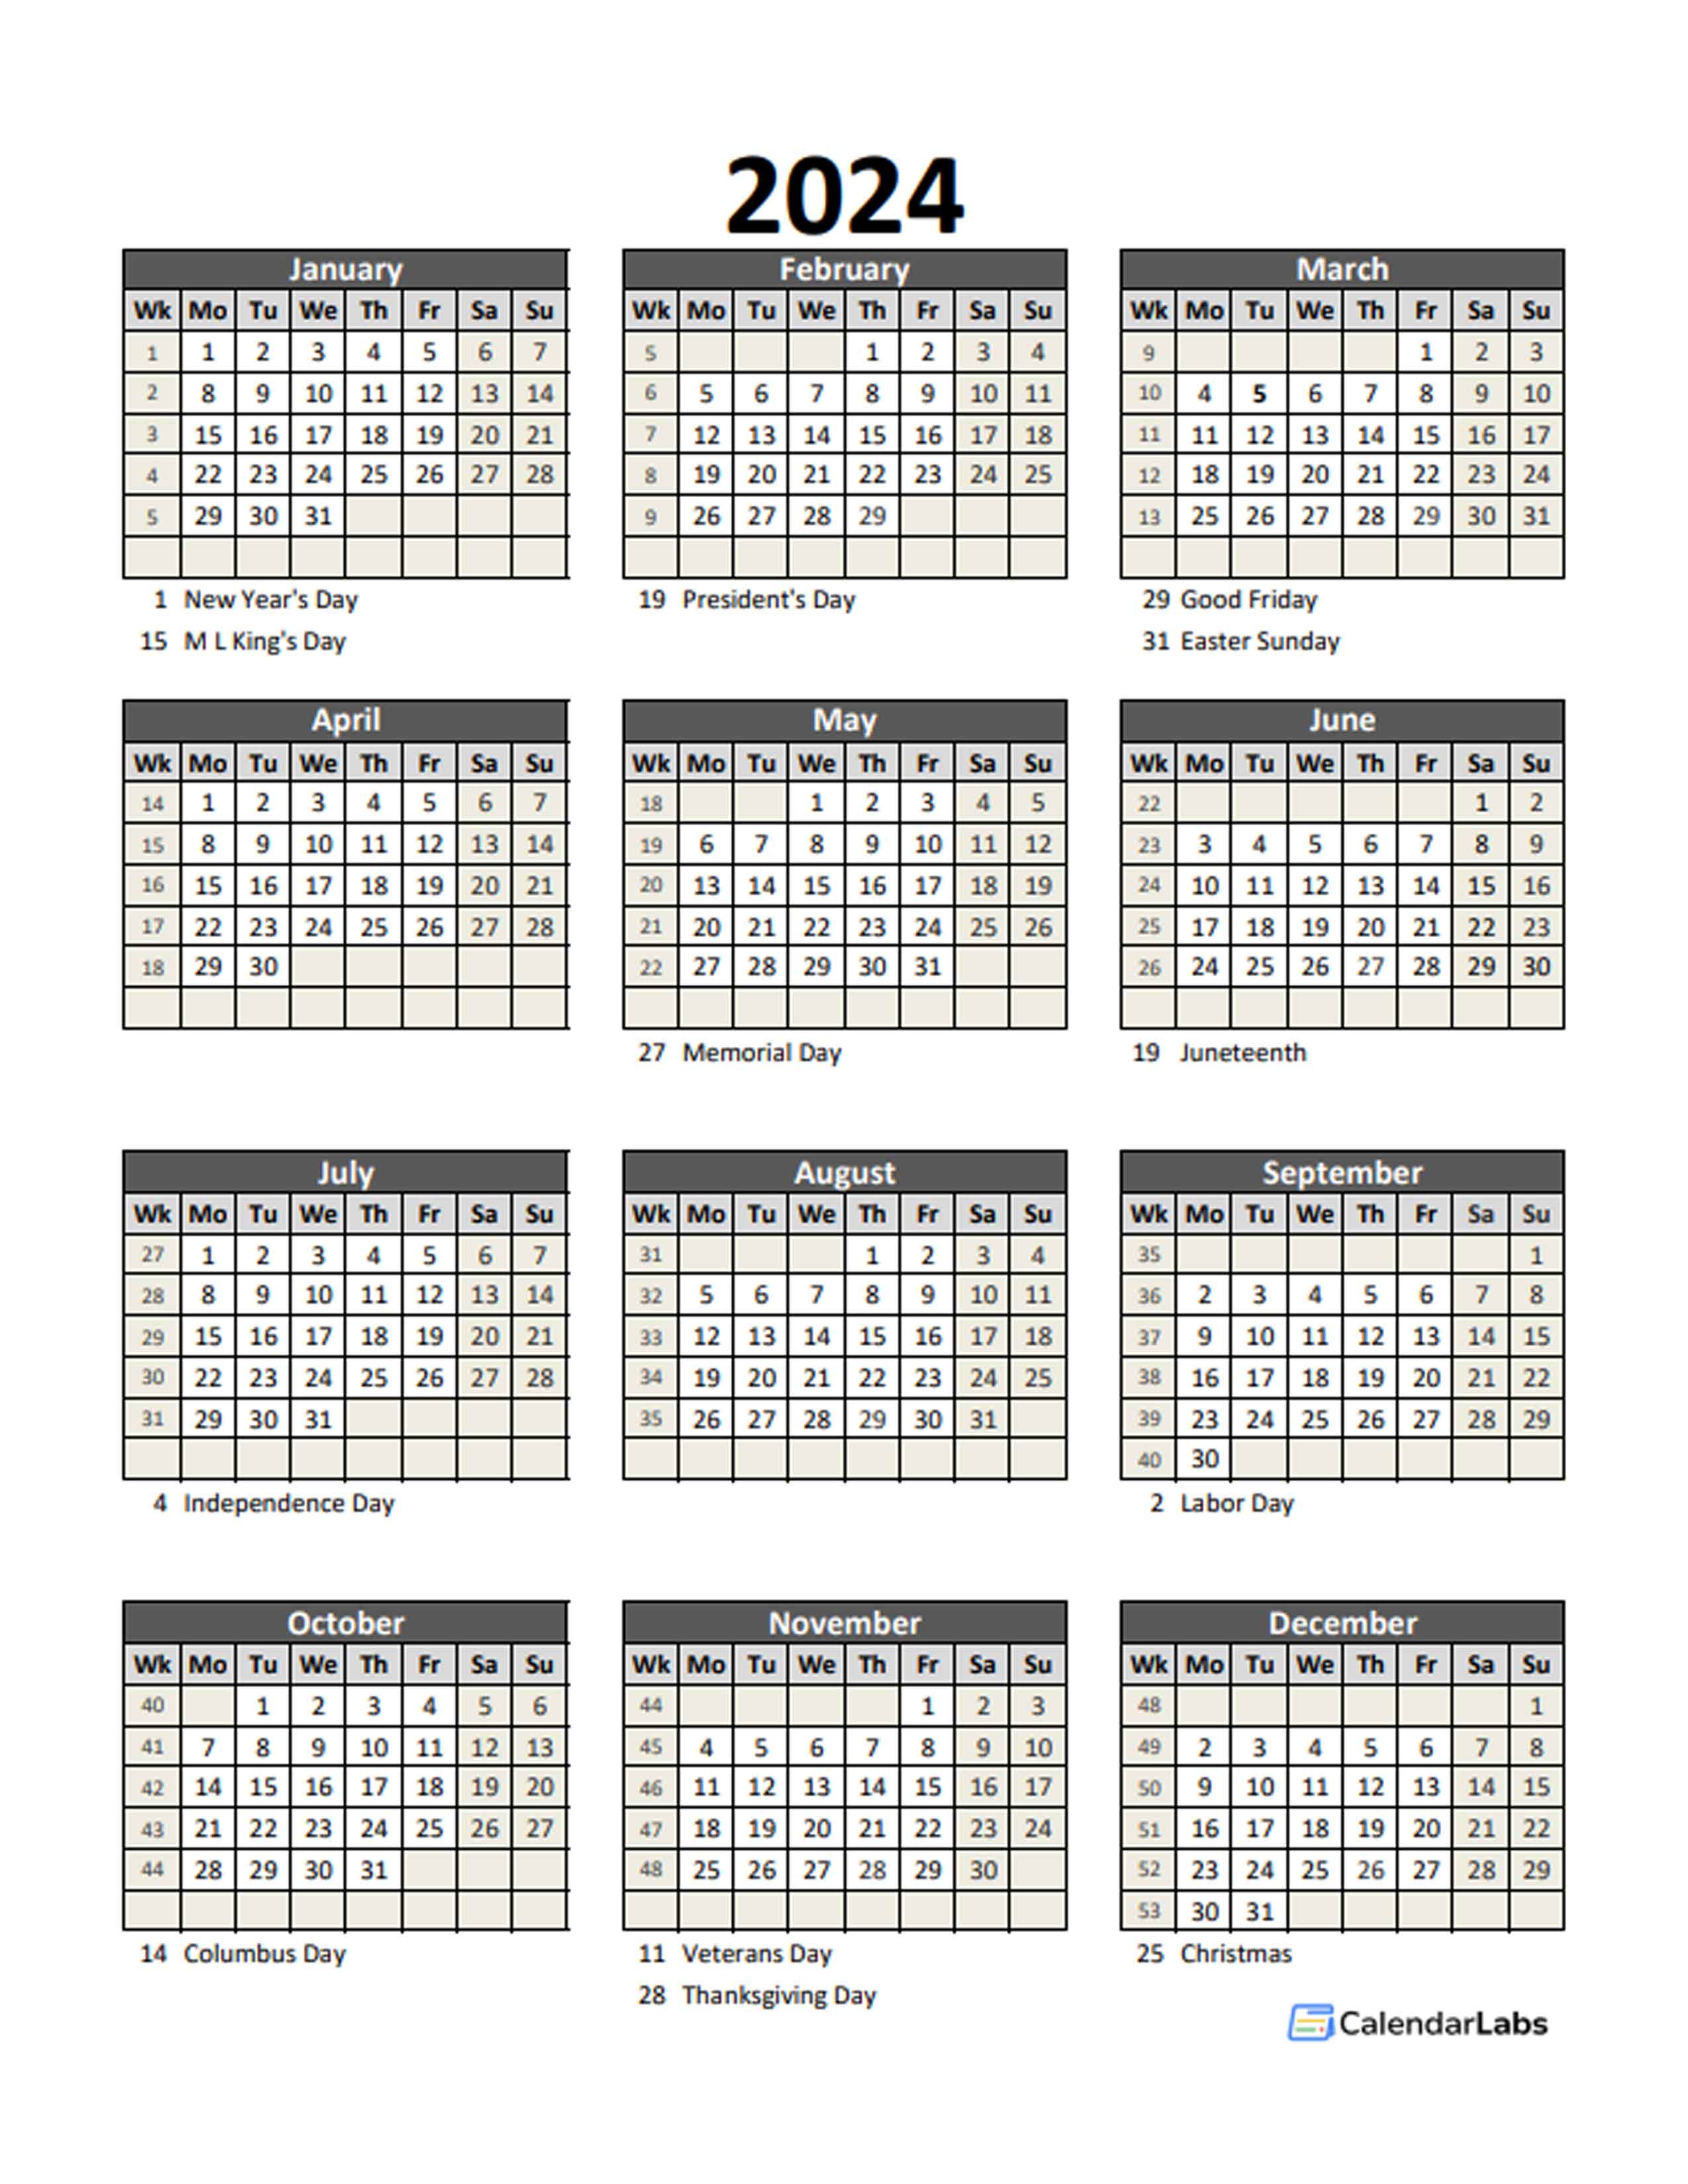 Excel Spreadsheet Calendar 2024 Calendar 2024